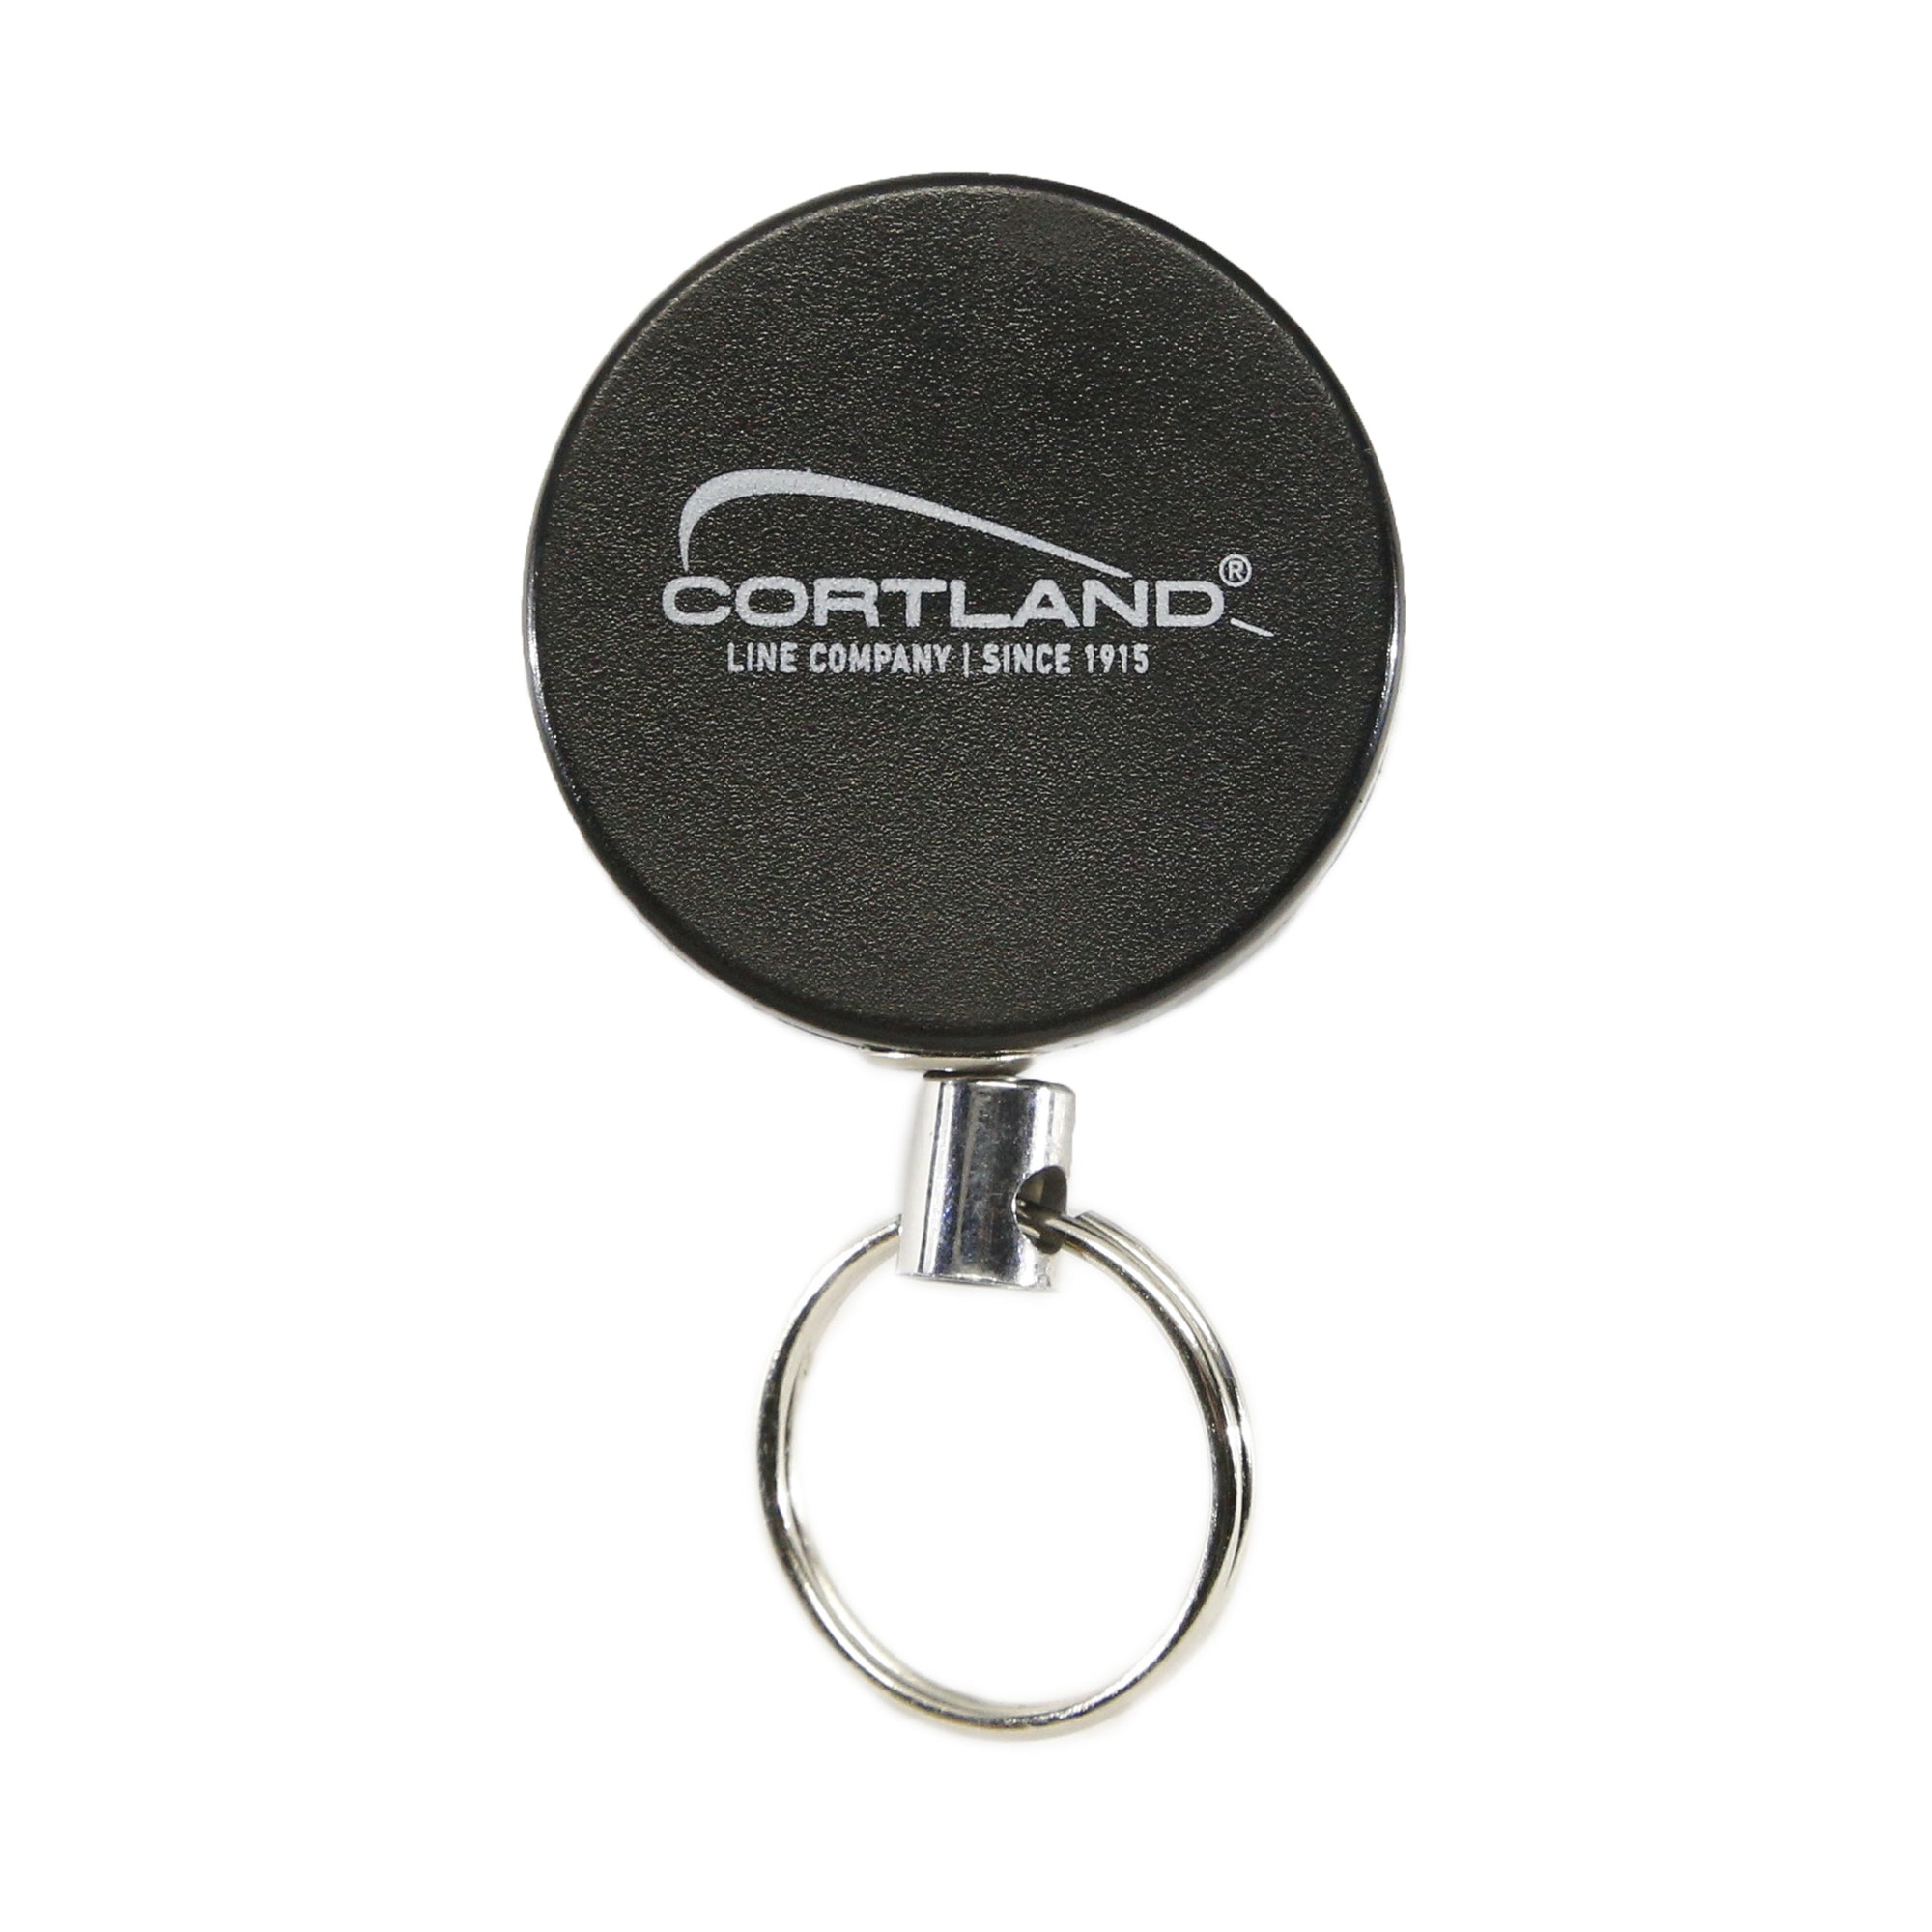 Fairplay Fishing Accessories – Cortland Line Company